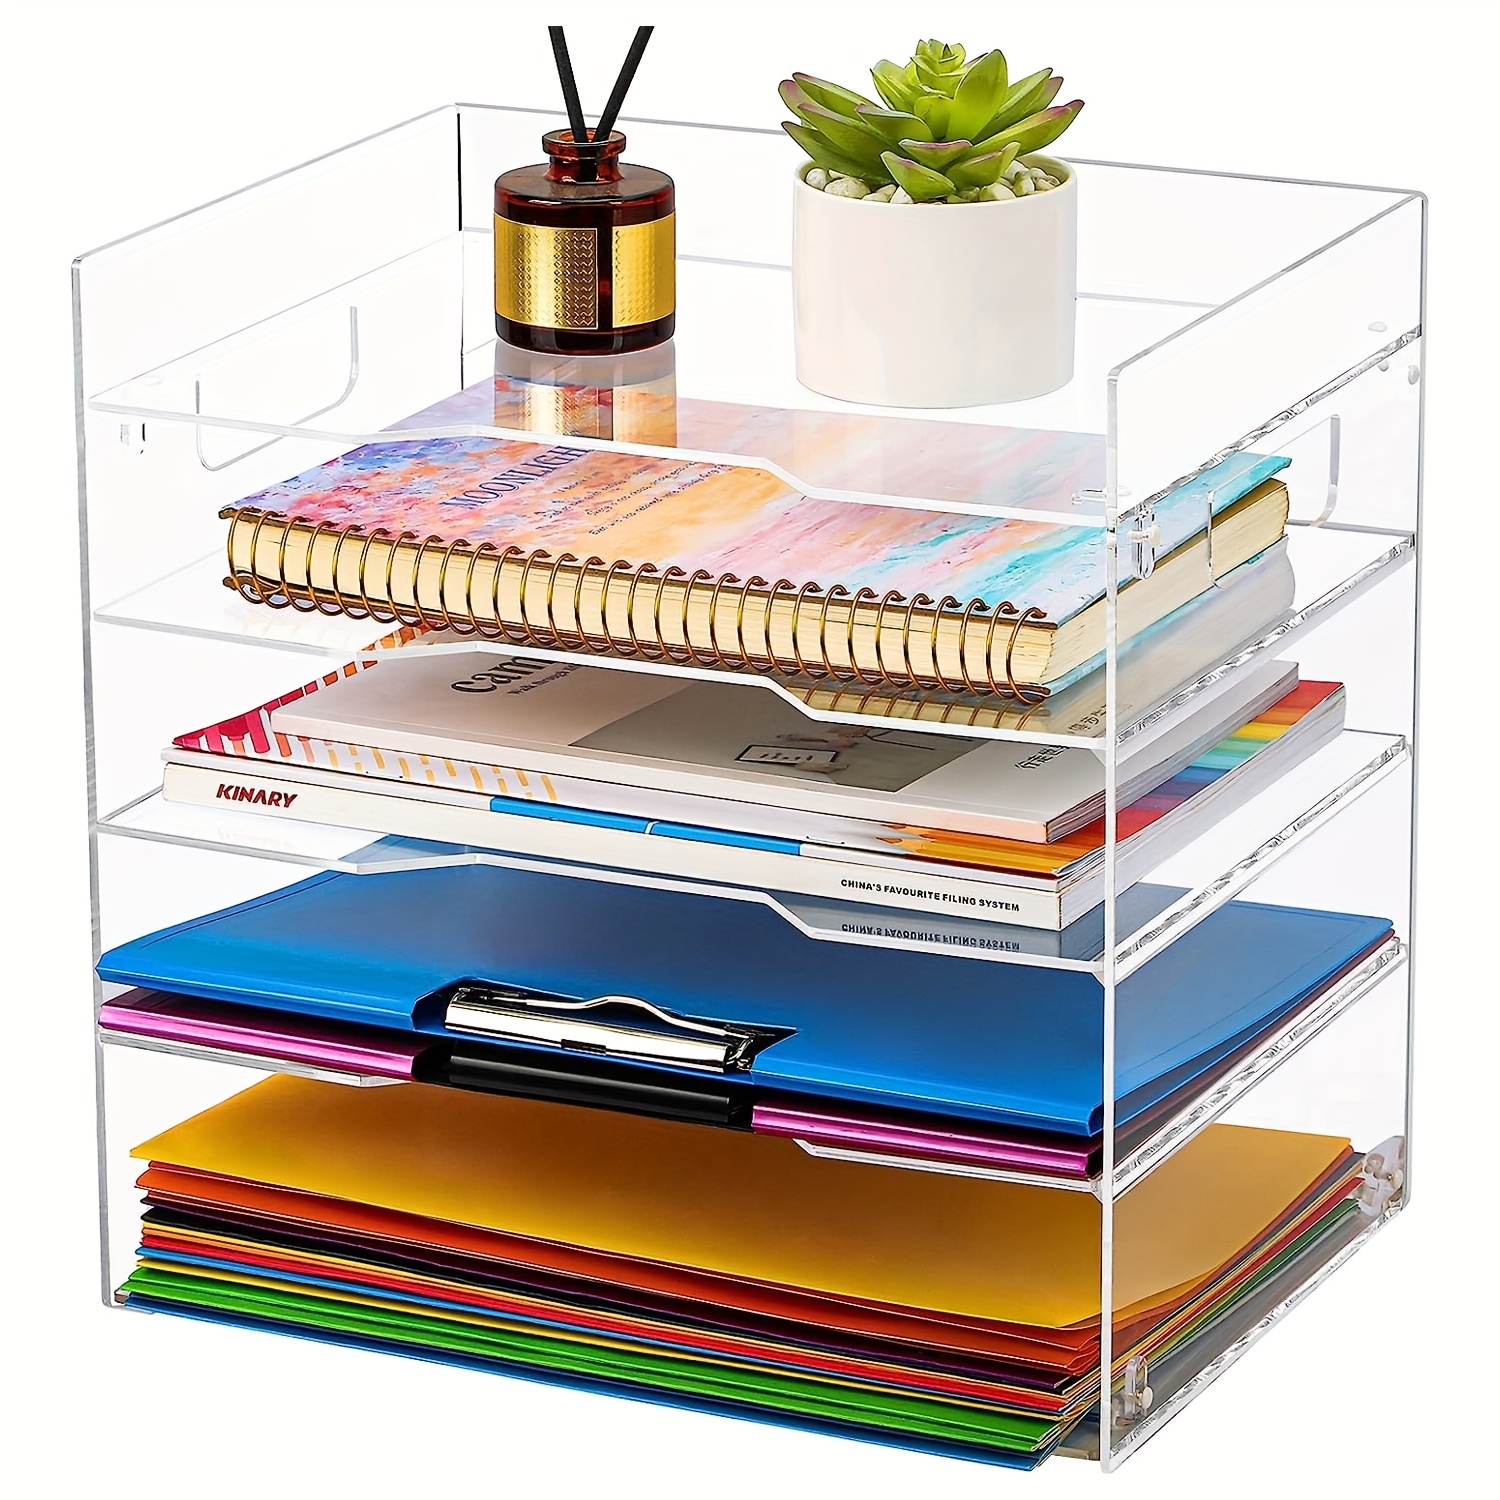 Paper Organizer Tray, Acrylic Desk Organizer, Clear Paper Tray